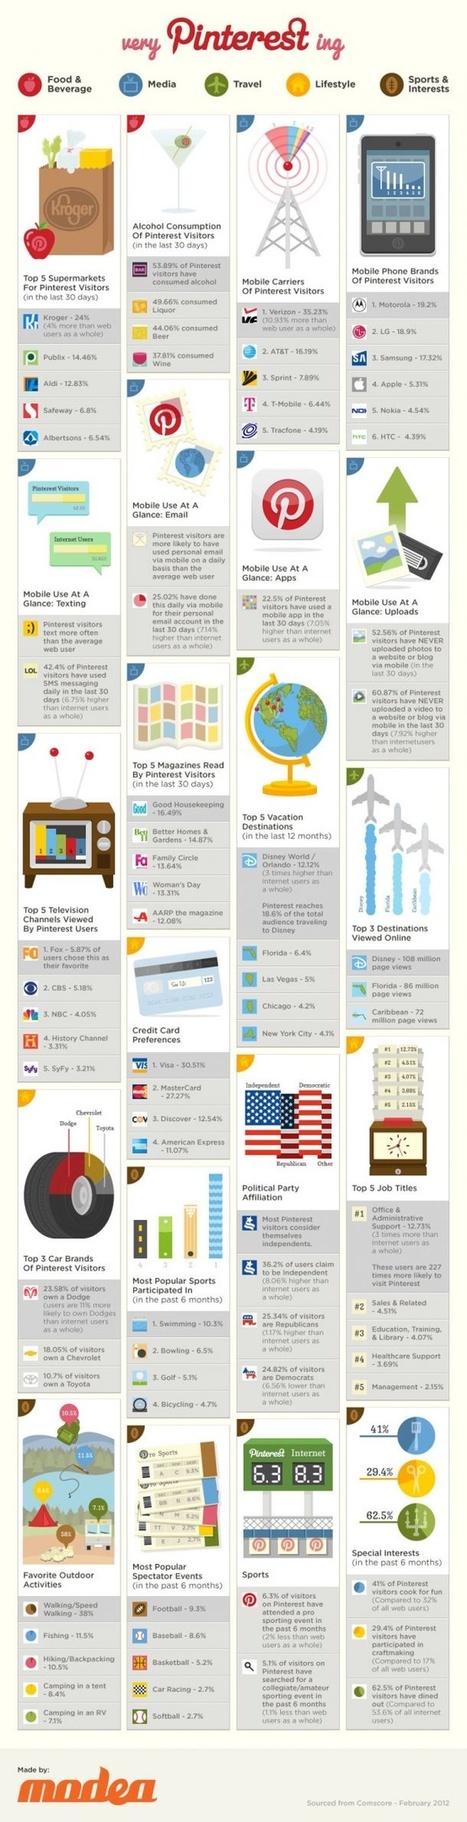 Social Media Marketing In Pinterest Style Infographic | Social Marketing Revolution | Scoop.it